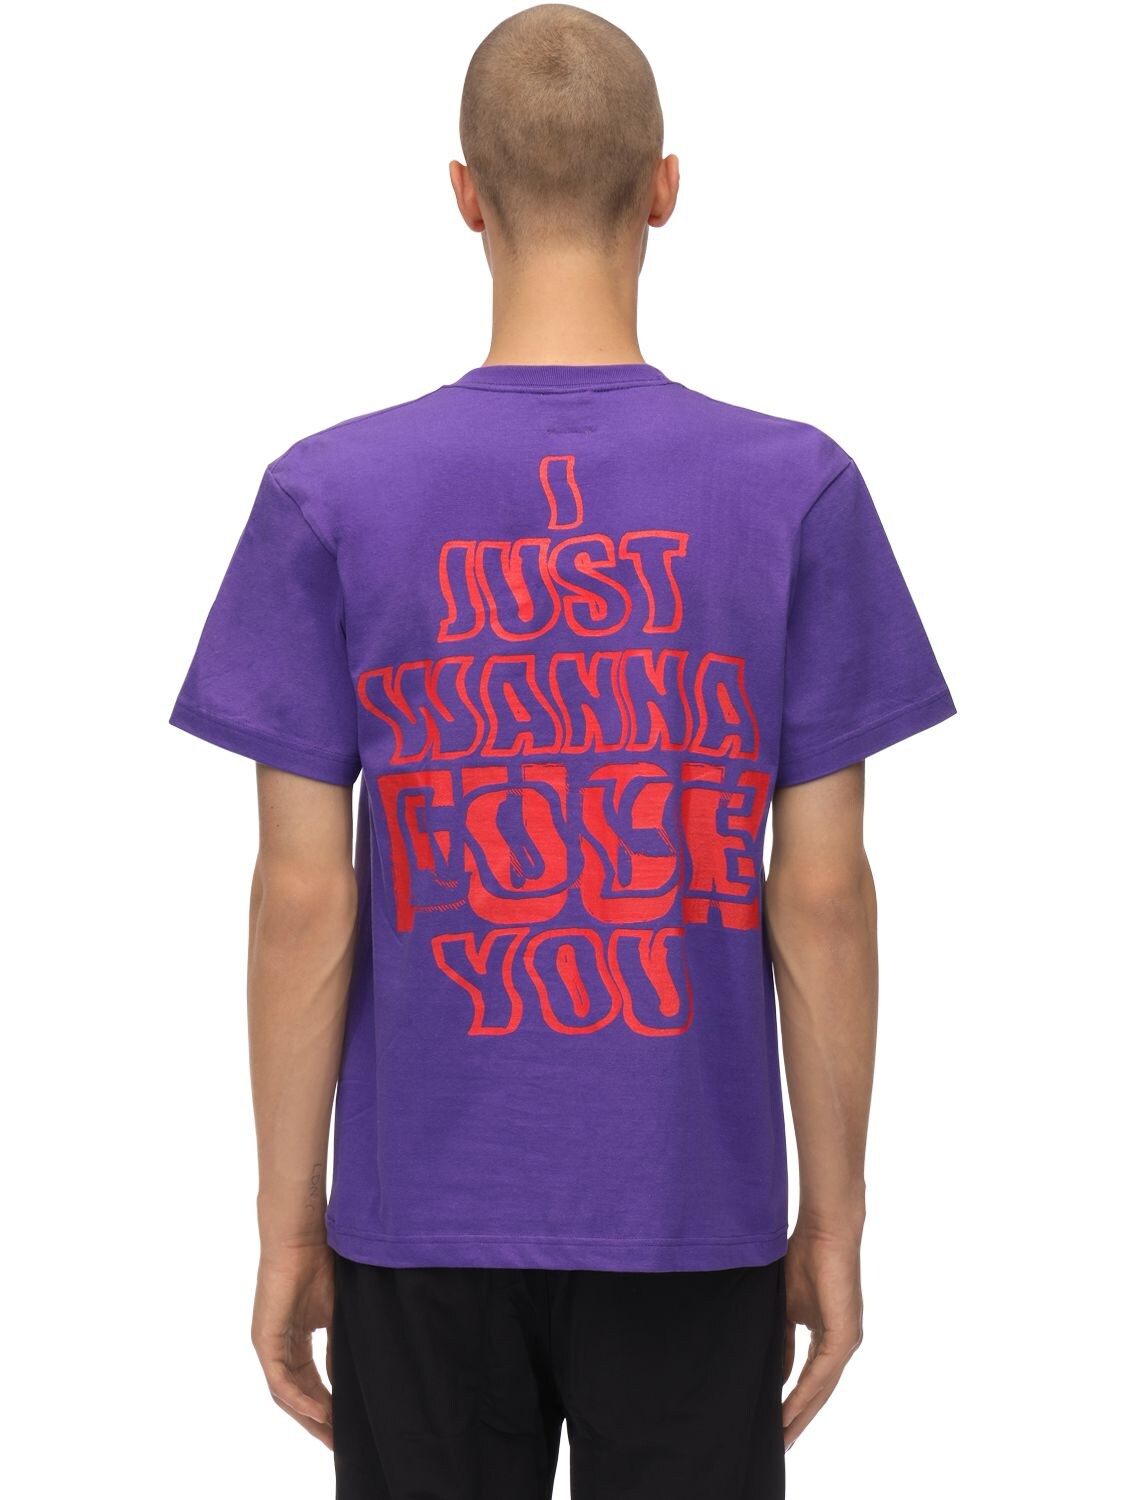 Fr2 - Fxxking Rabbits Love Or Fxxk"纯棉平纹针织t恤" In Purple